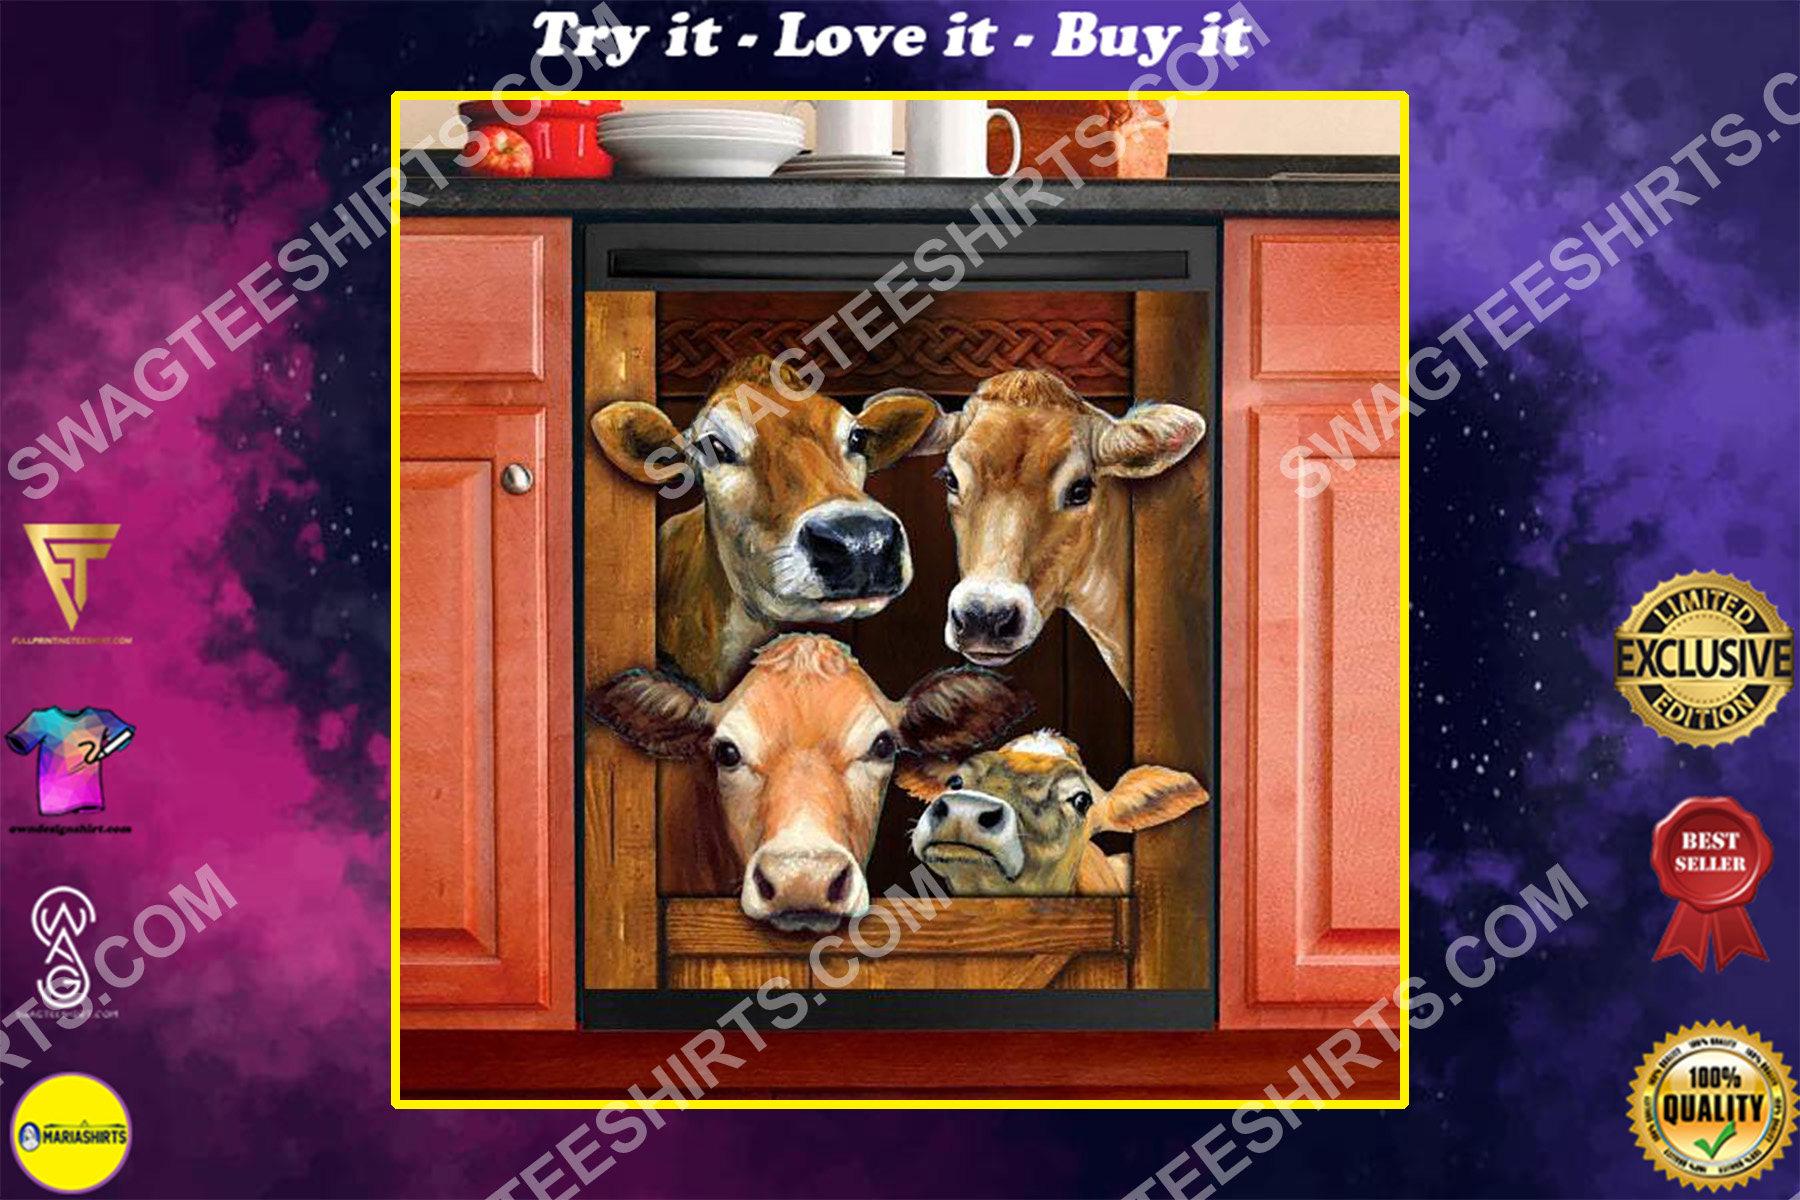 cow farm life kitchen decorative dishwasher magnet cover